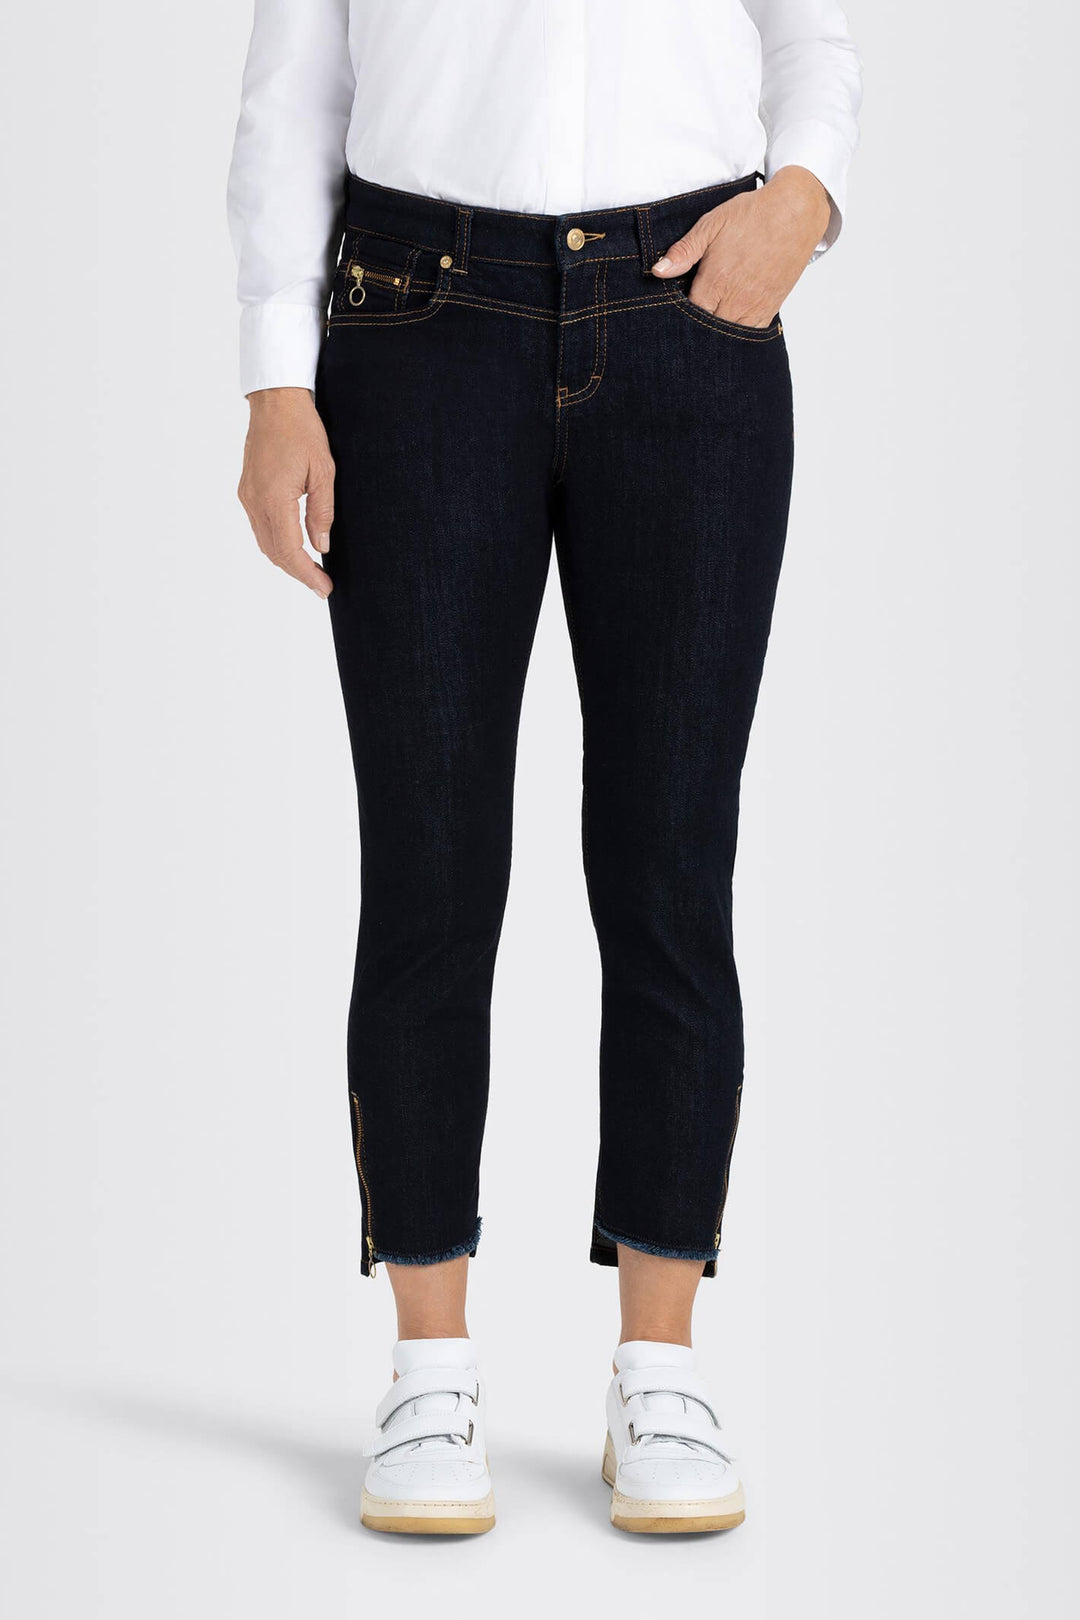 MAC Rich Slim Chic 5755 0389L D683 Fashion Rinsed Jeans - Olivia Grace Fashion